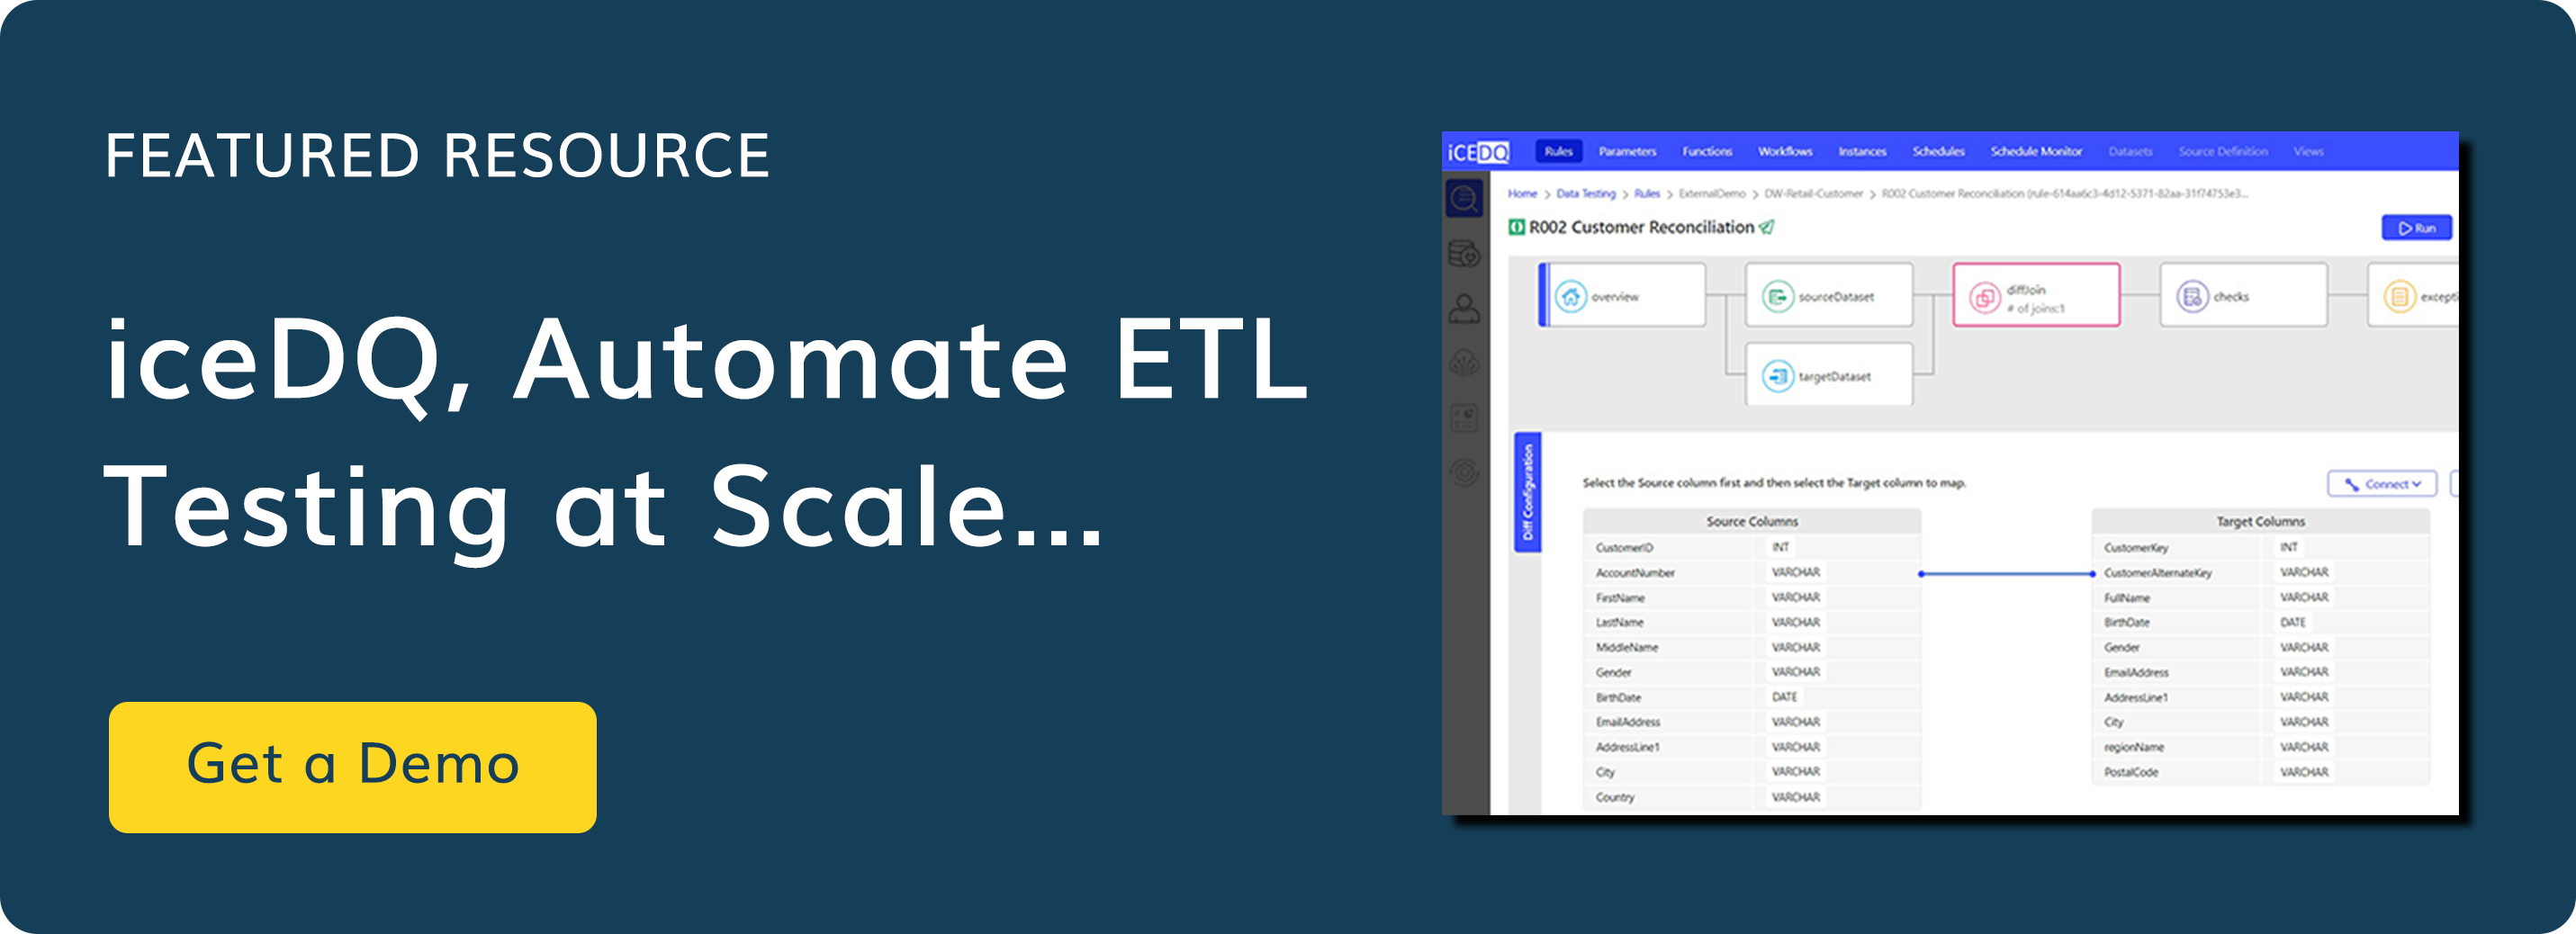 ETL Testing CTA Image - iceDQ